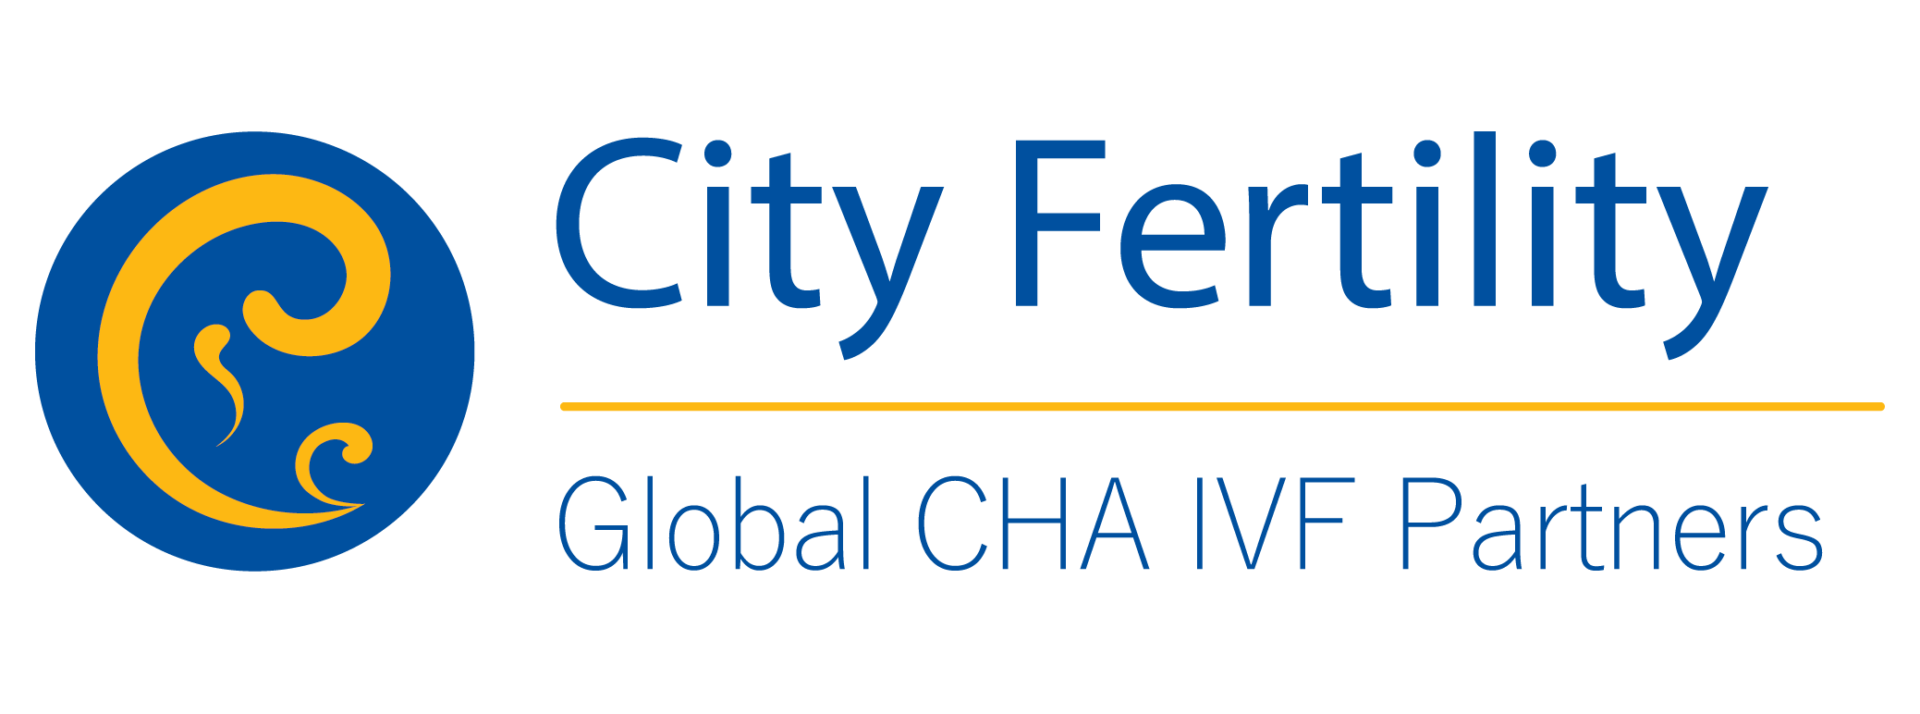 city fertility logo